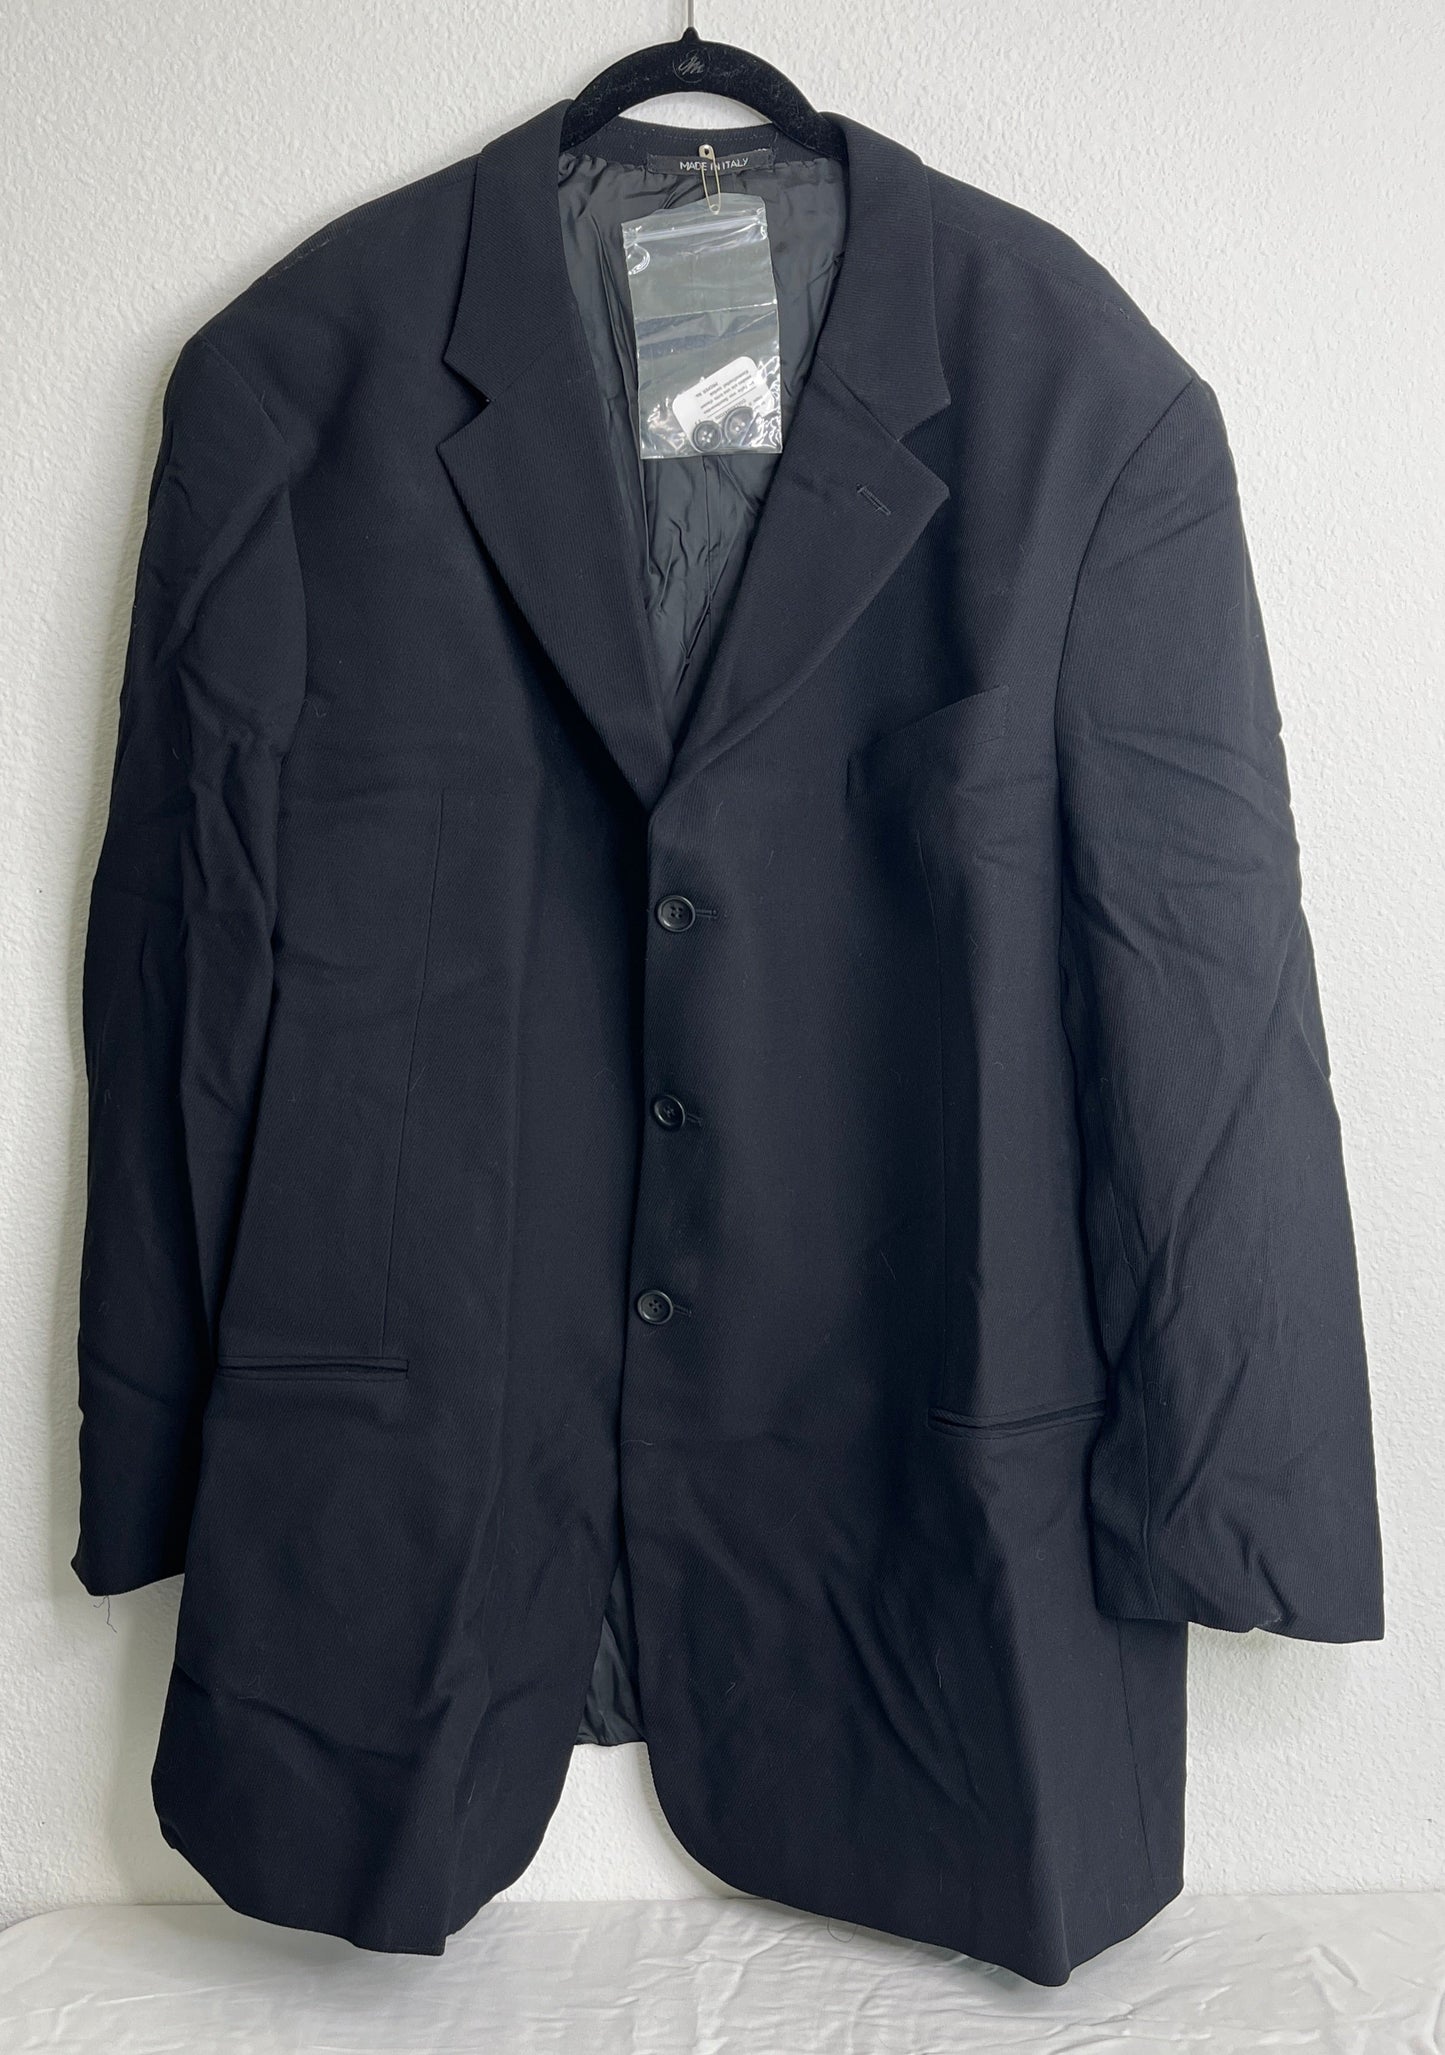 Armani MEN'S Jacket Black Size 50L SKU 000441